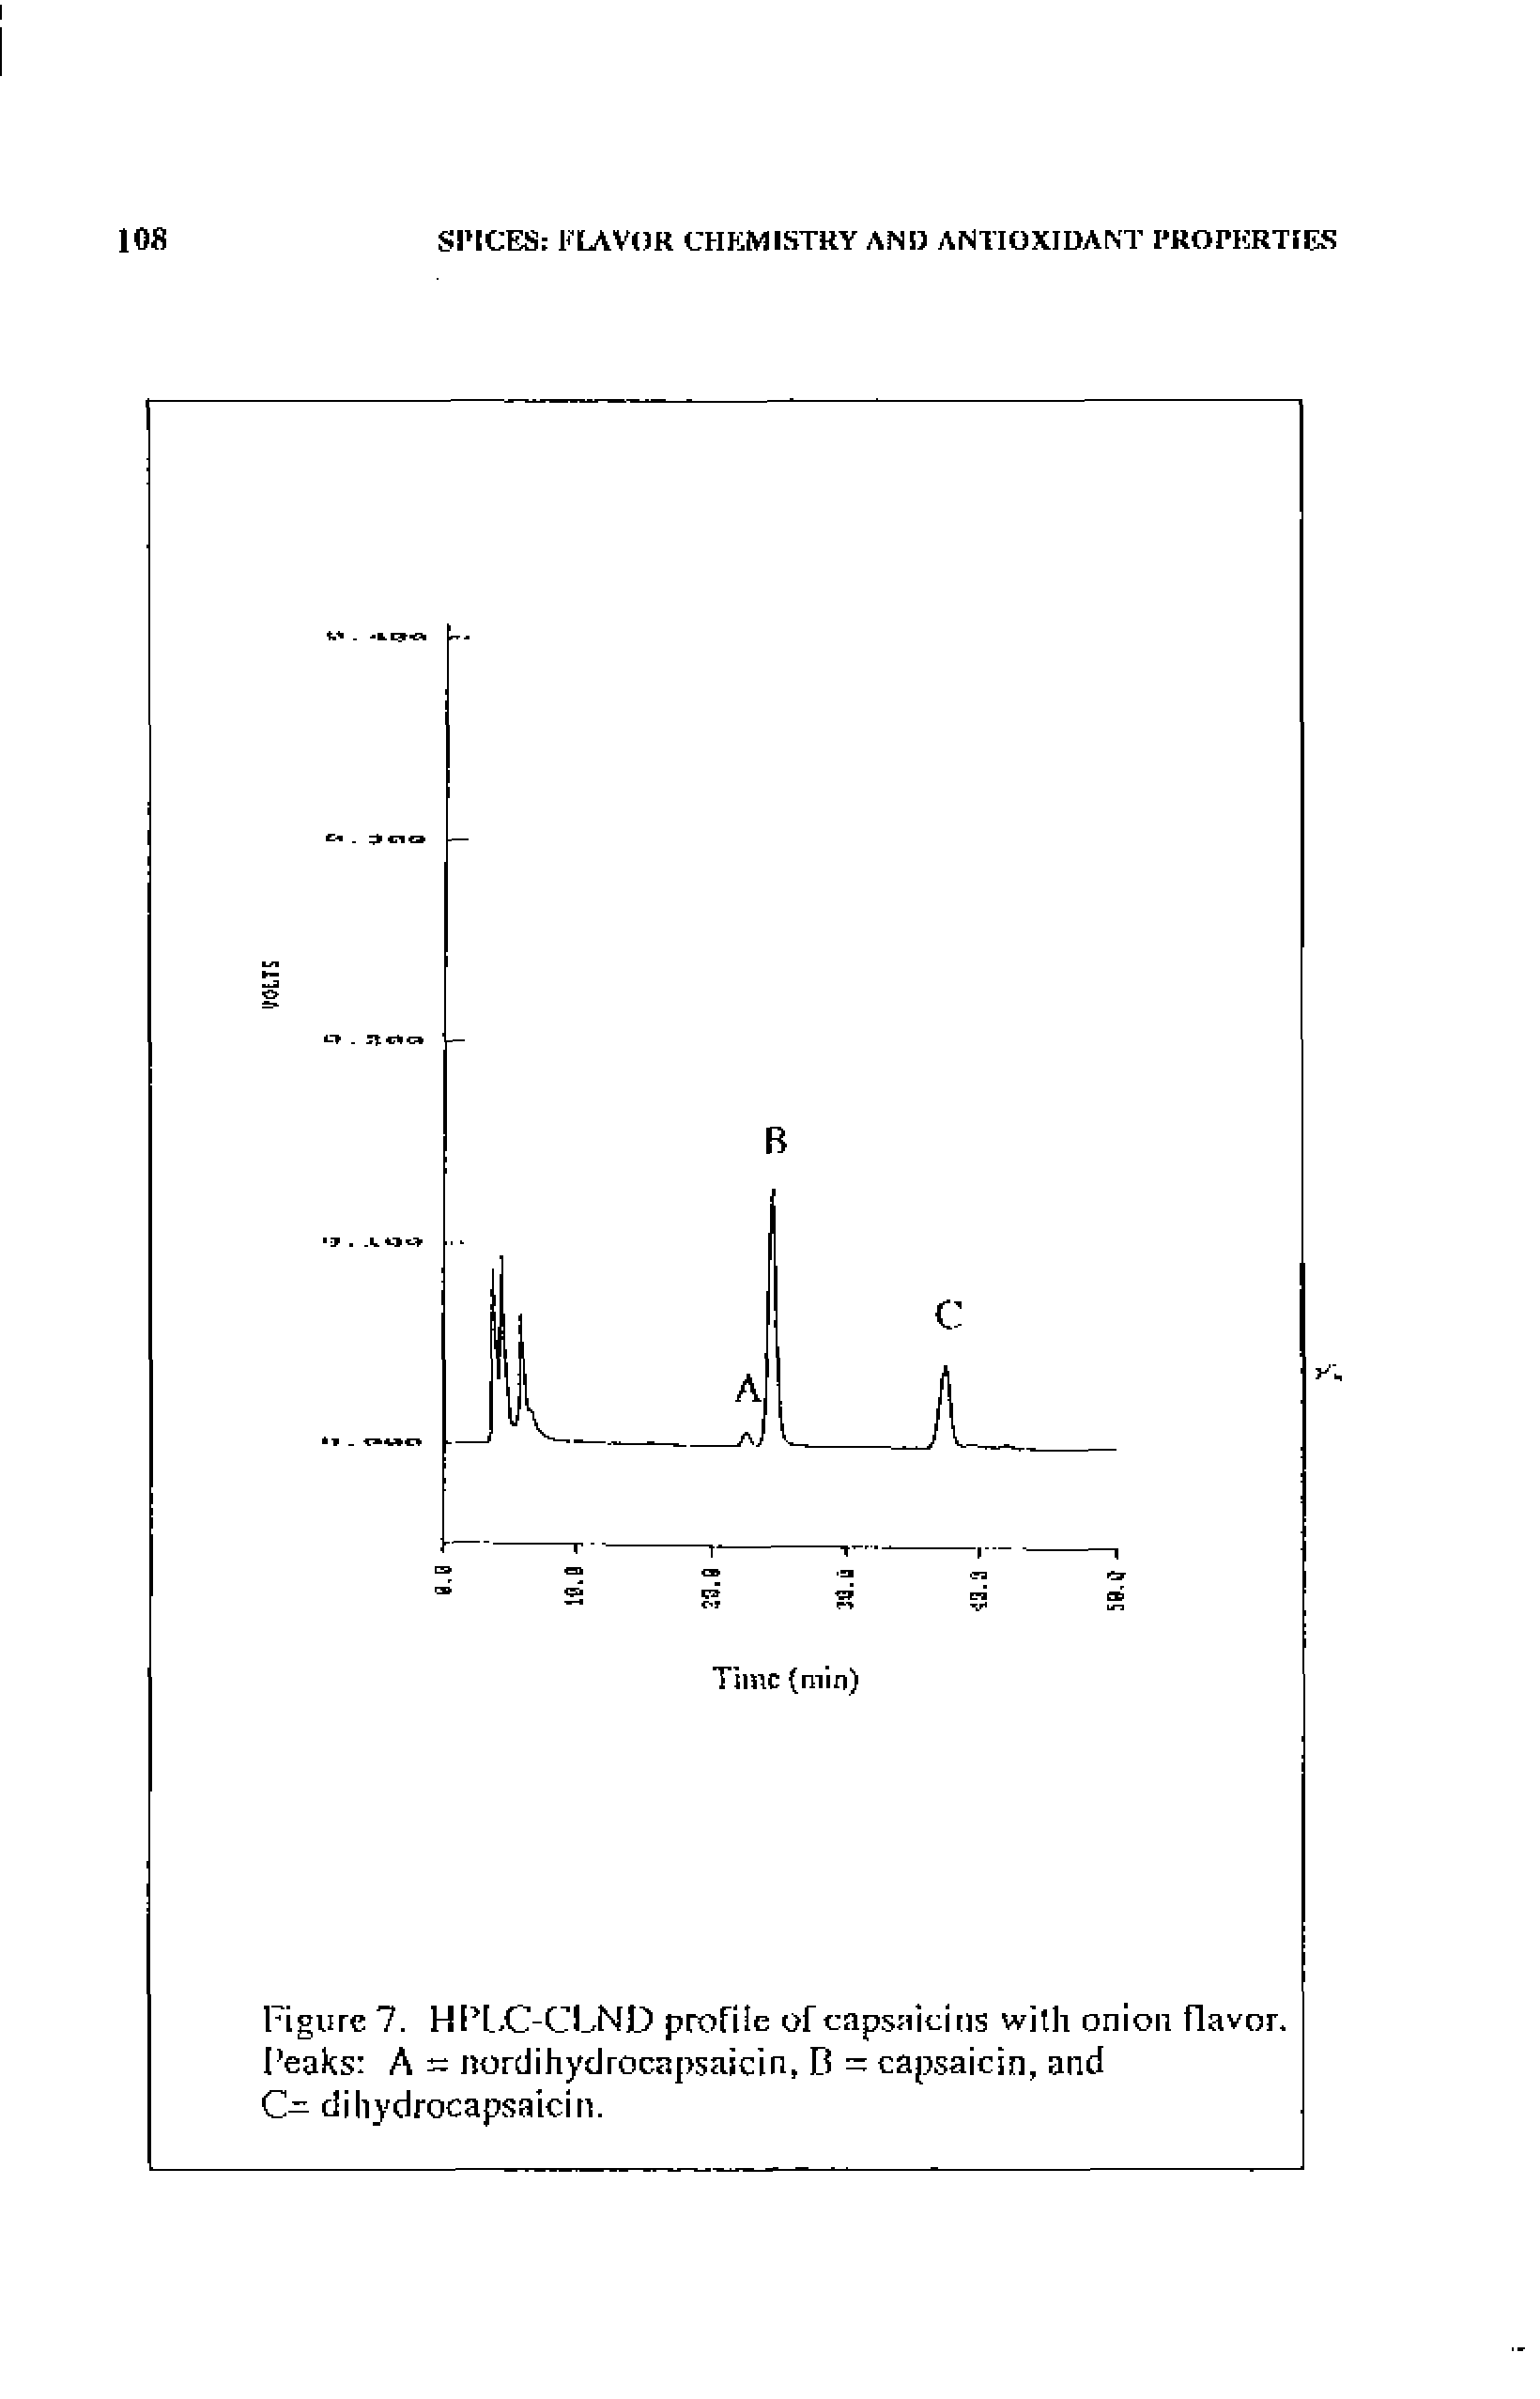 Figure 7. HPL.C-CLND profile of eapsuieins with onion flavor. Peaks A = nordihydrocapsaicin, B = capsaicin, and clihydrocapsaicin.